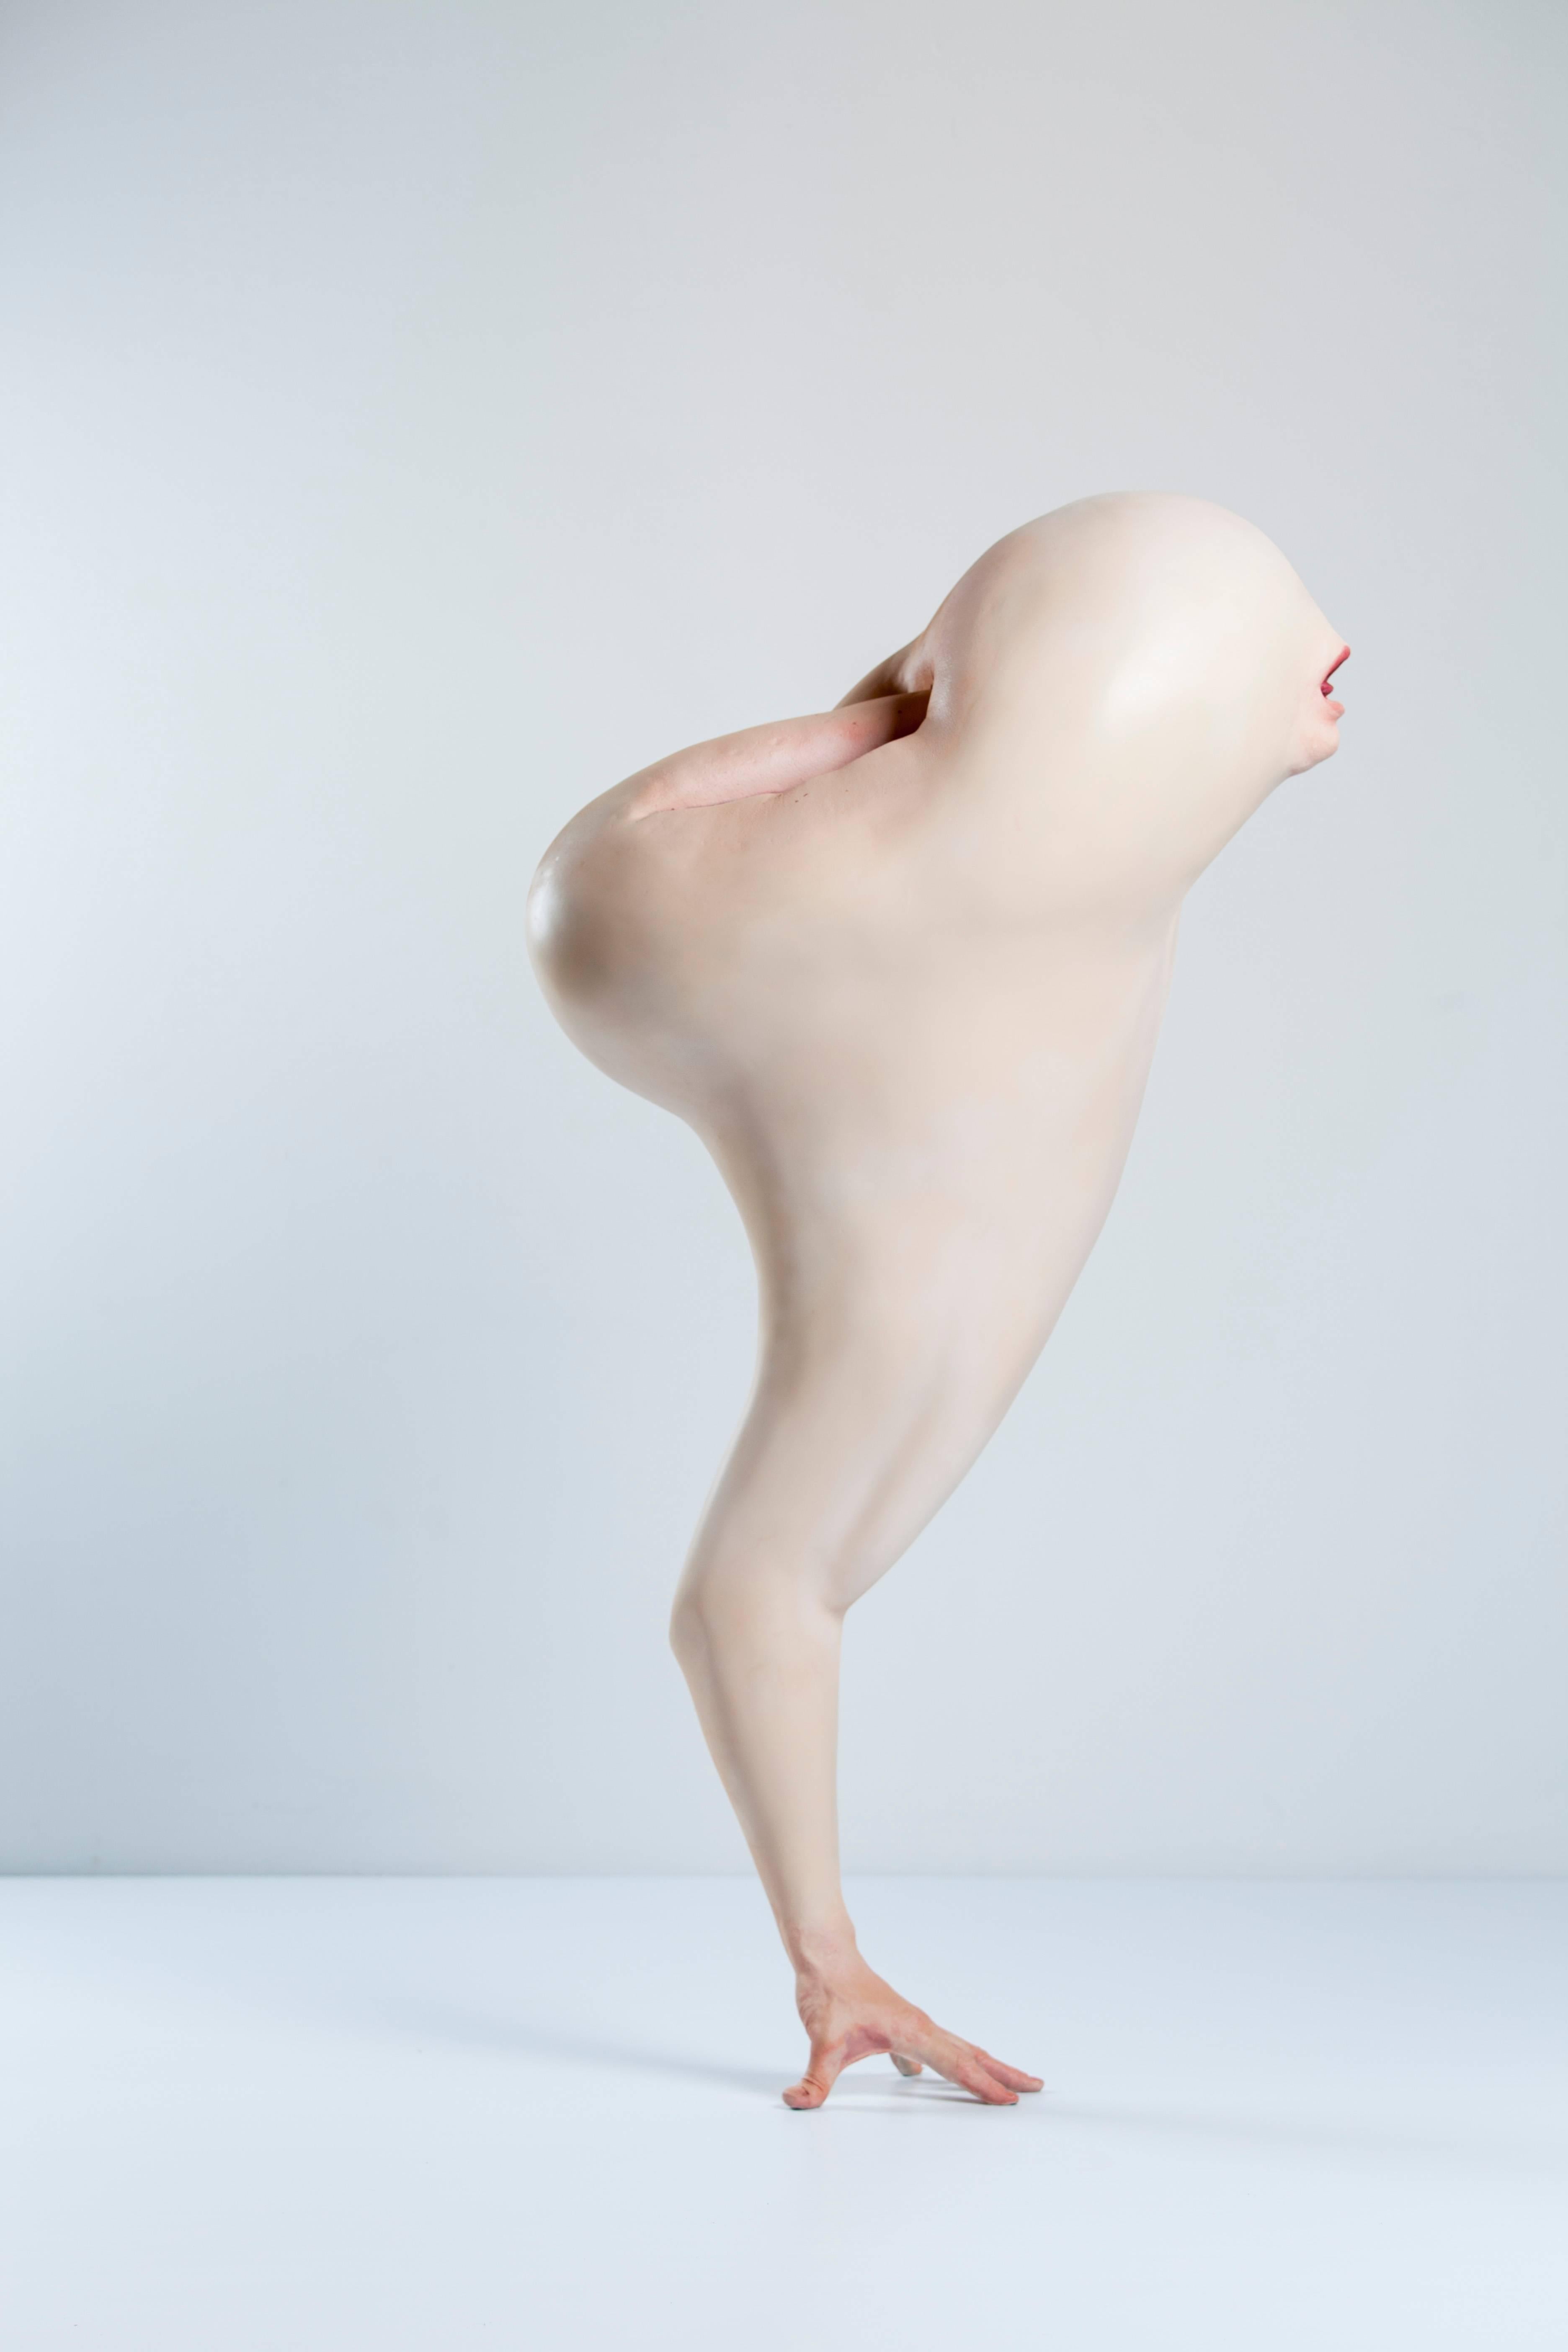 Smörgåsbot - Sculpture by Bevan Ramsay